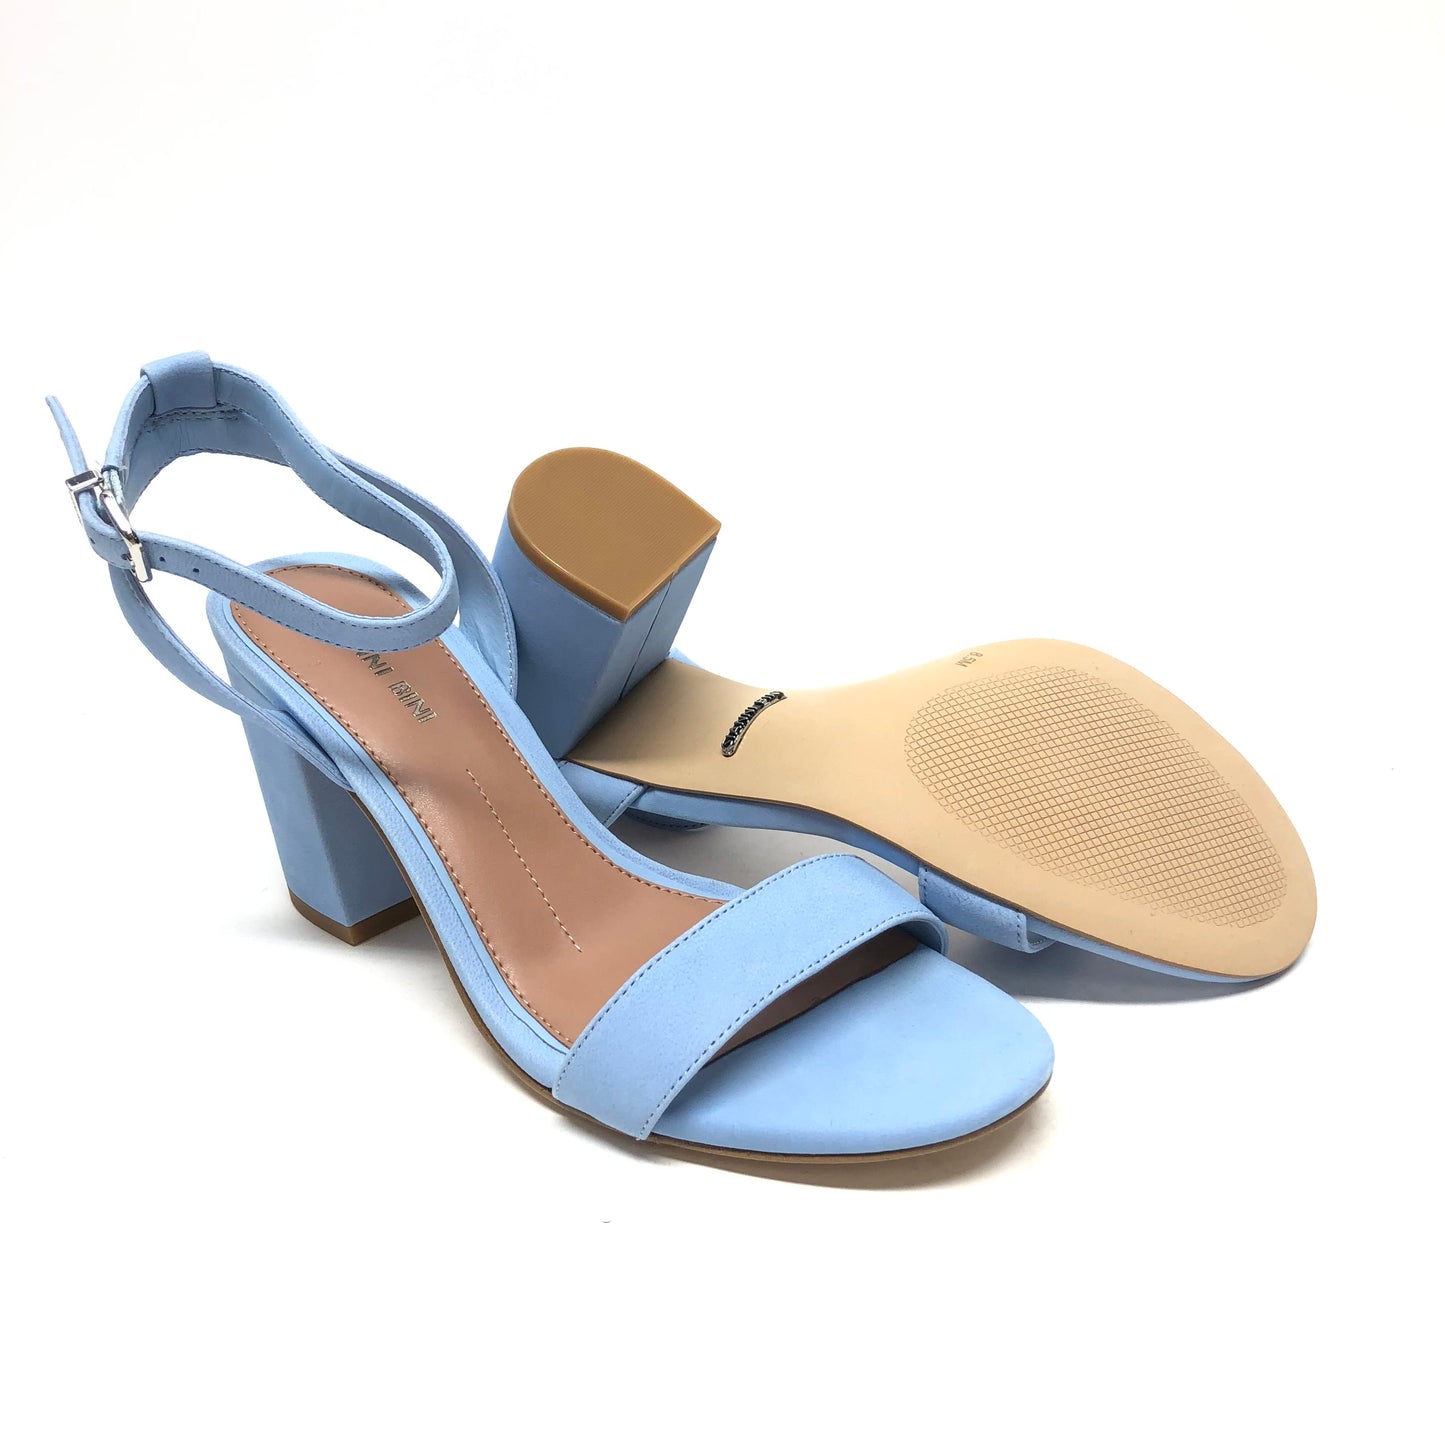 Blue Sandals Heels Block Gianni Bini, Size 8.5